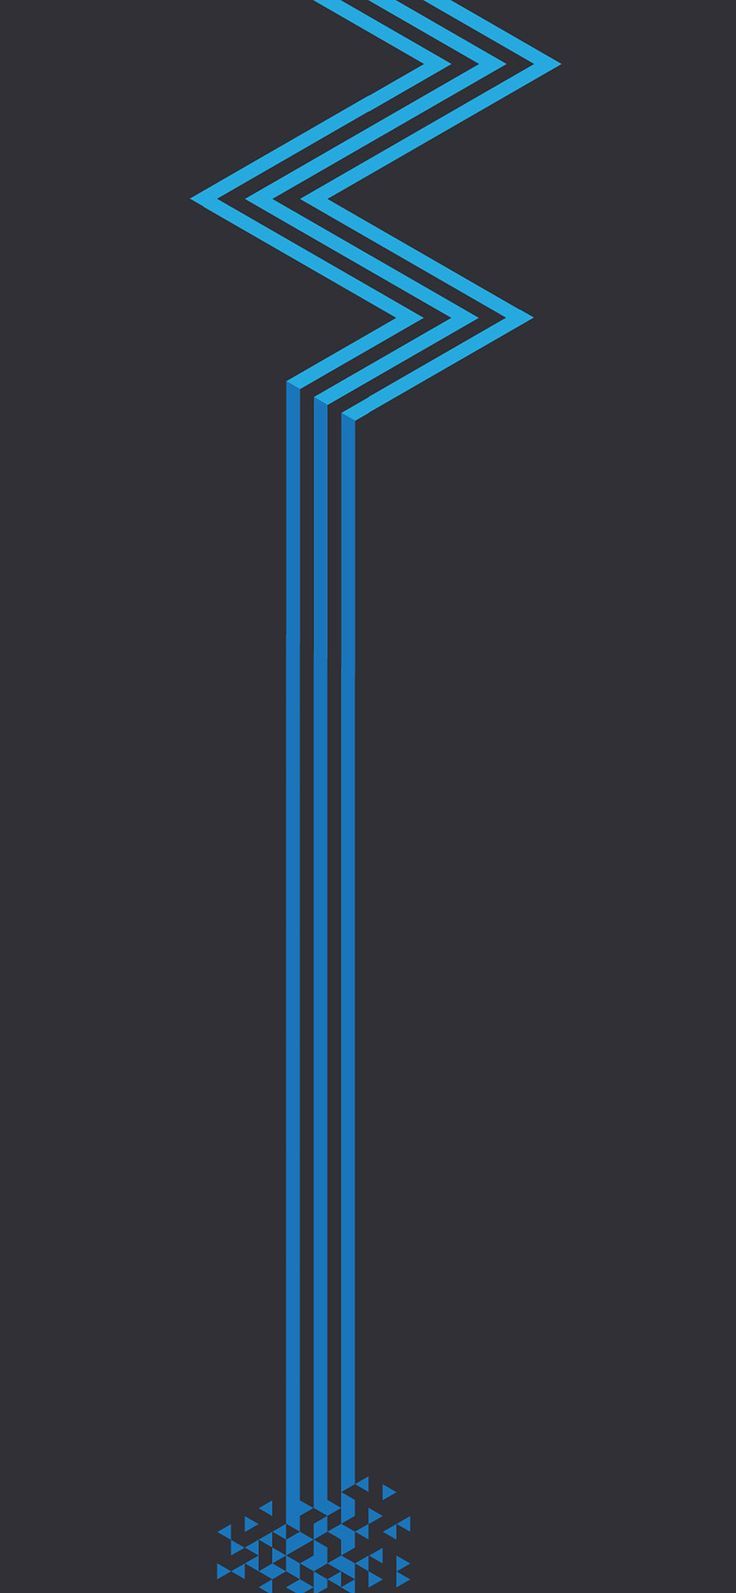 iPhone X wallpaper, minimal blue dark line abstract digital